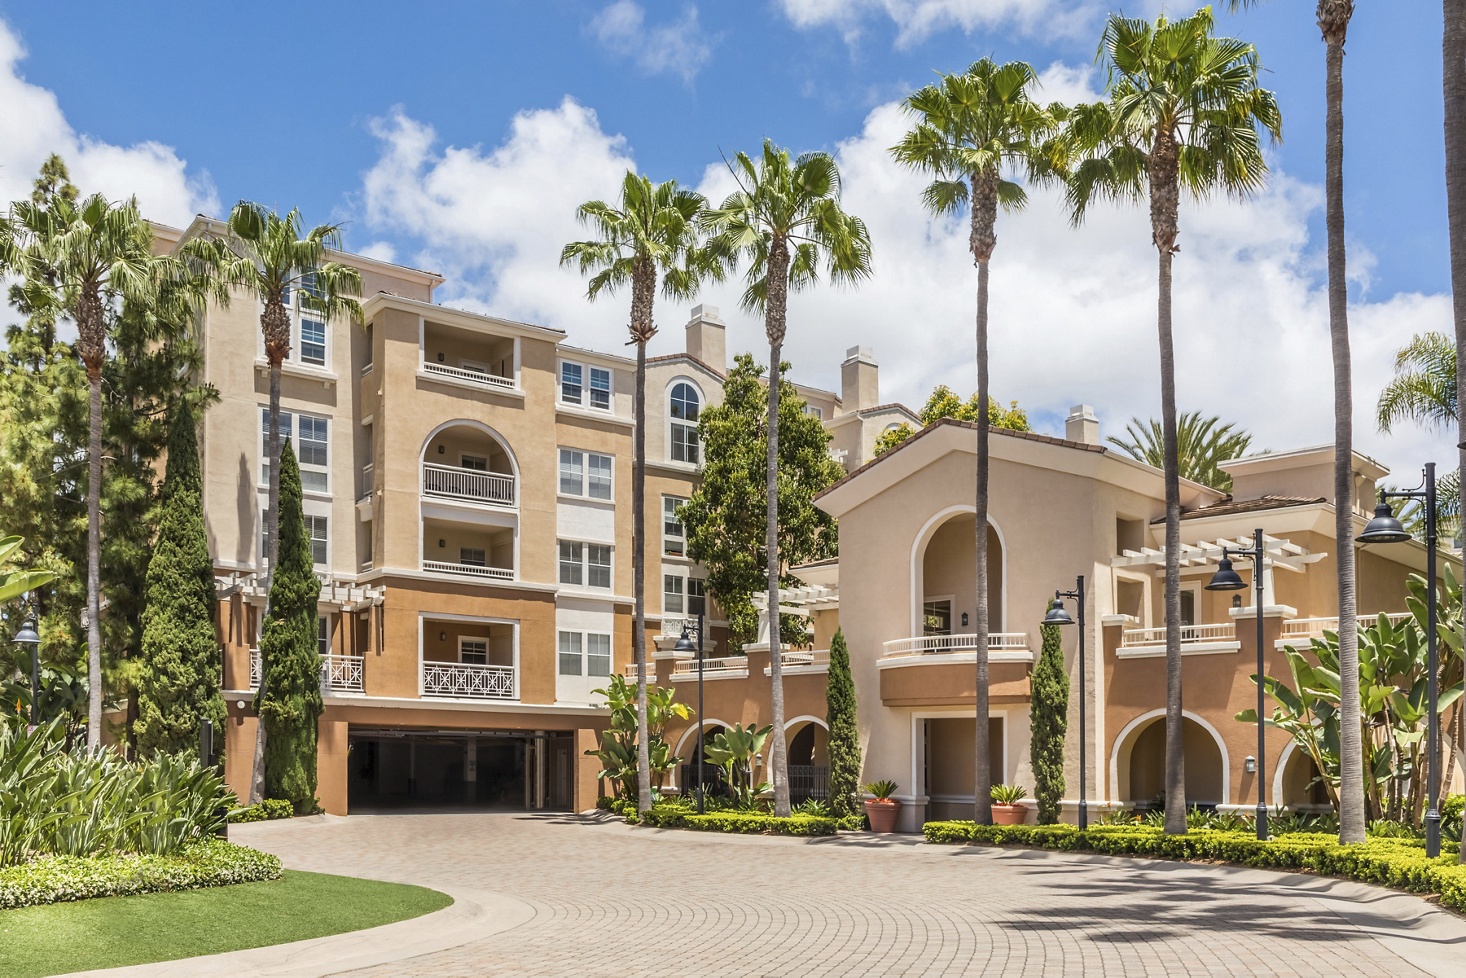 La Jolla Palms Apartments in San Diego